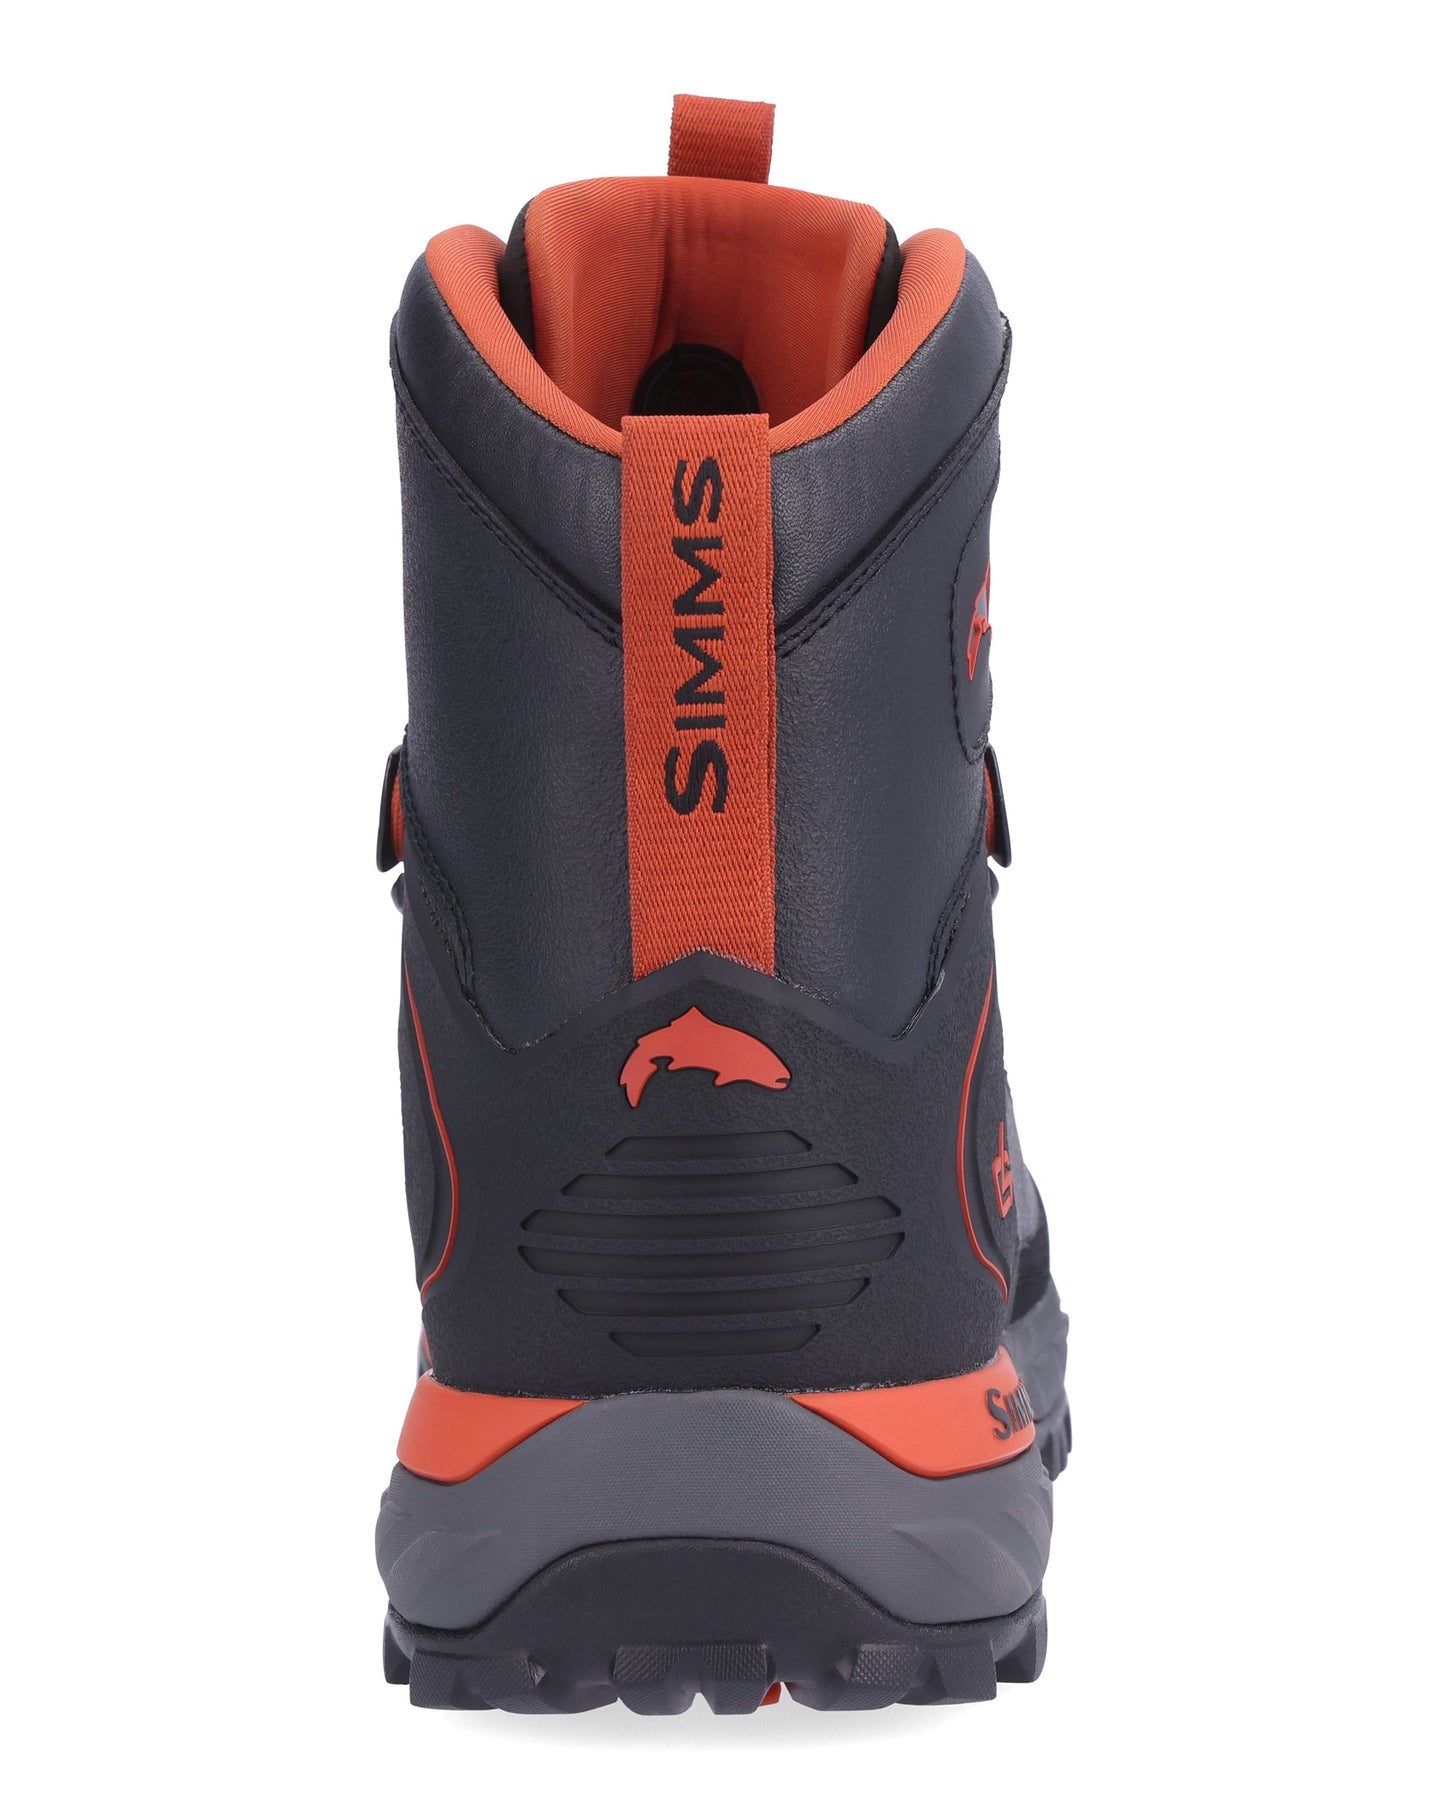 Simms G4 Pro Powerlock Wading Boots